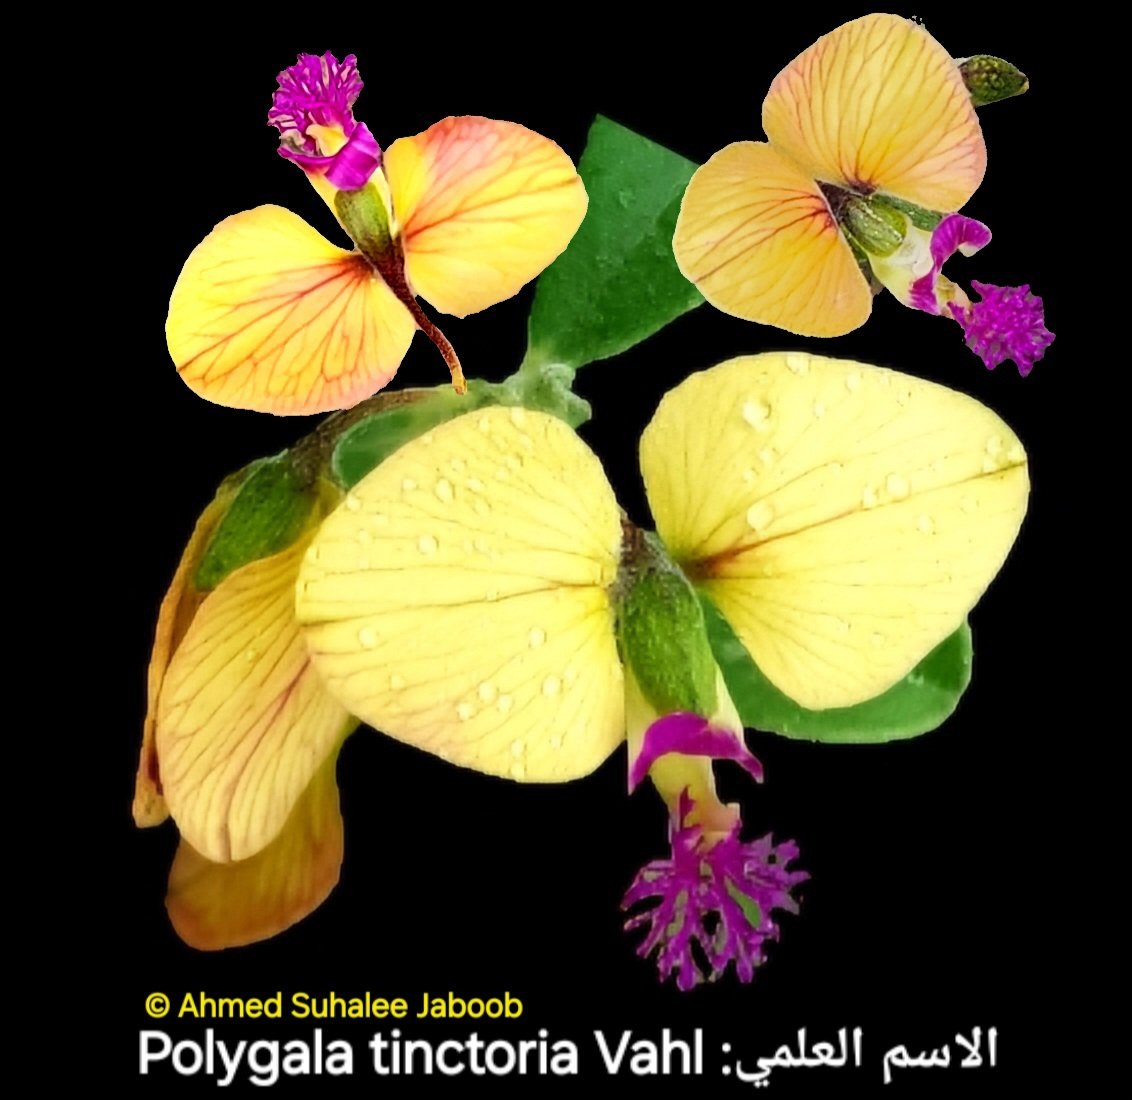 Polygala tinctoria Vahl :الاسم العلمي
من الفصيلة المغزرية Polygalaceae
الاسم المحلي: هروم آضرح
أسماء أخرى: في السعودية تسمى شجرة الحورة #فلورا_عمان